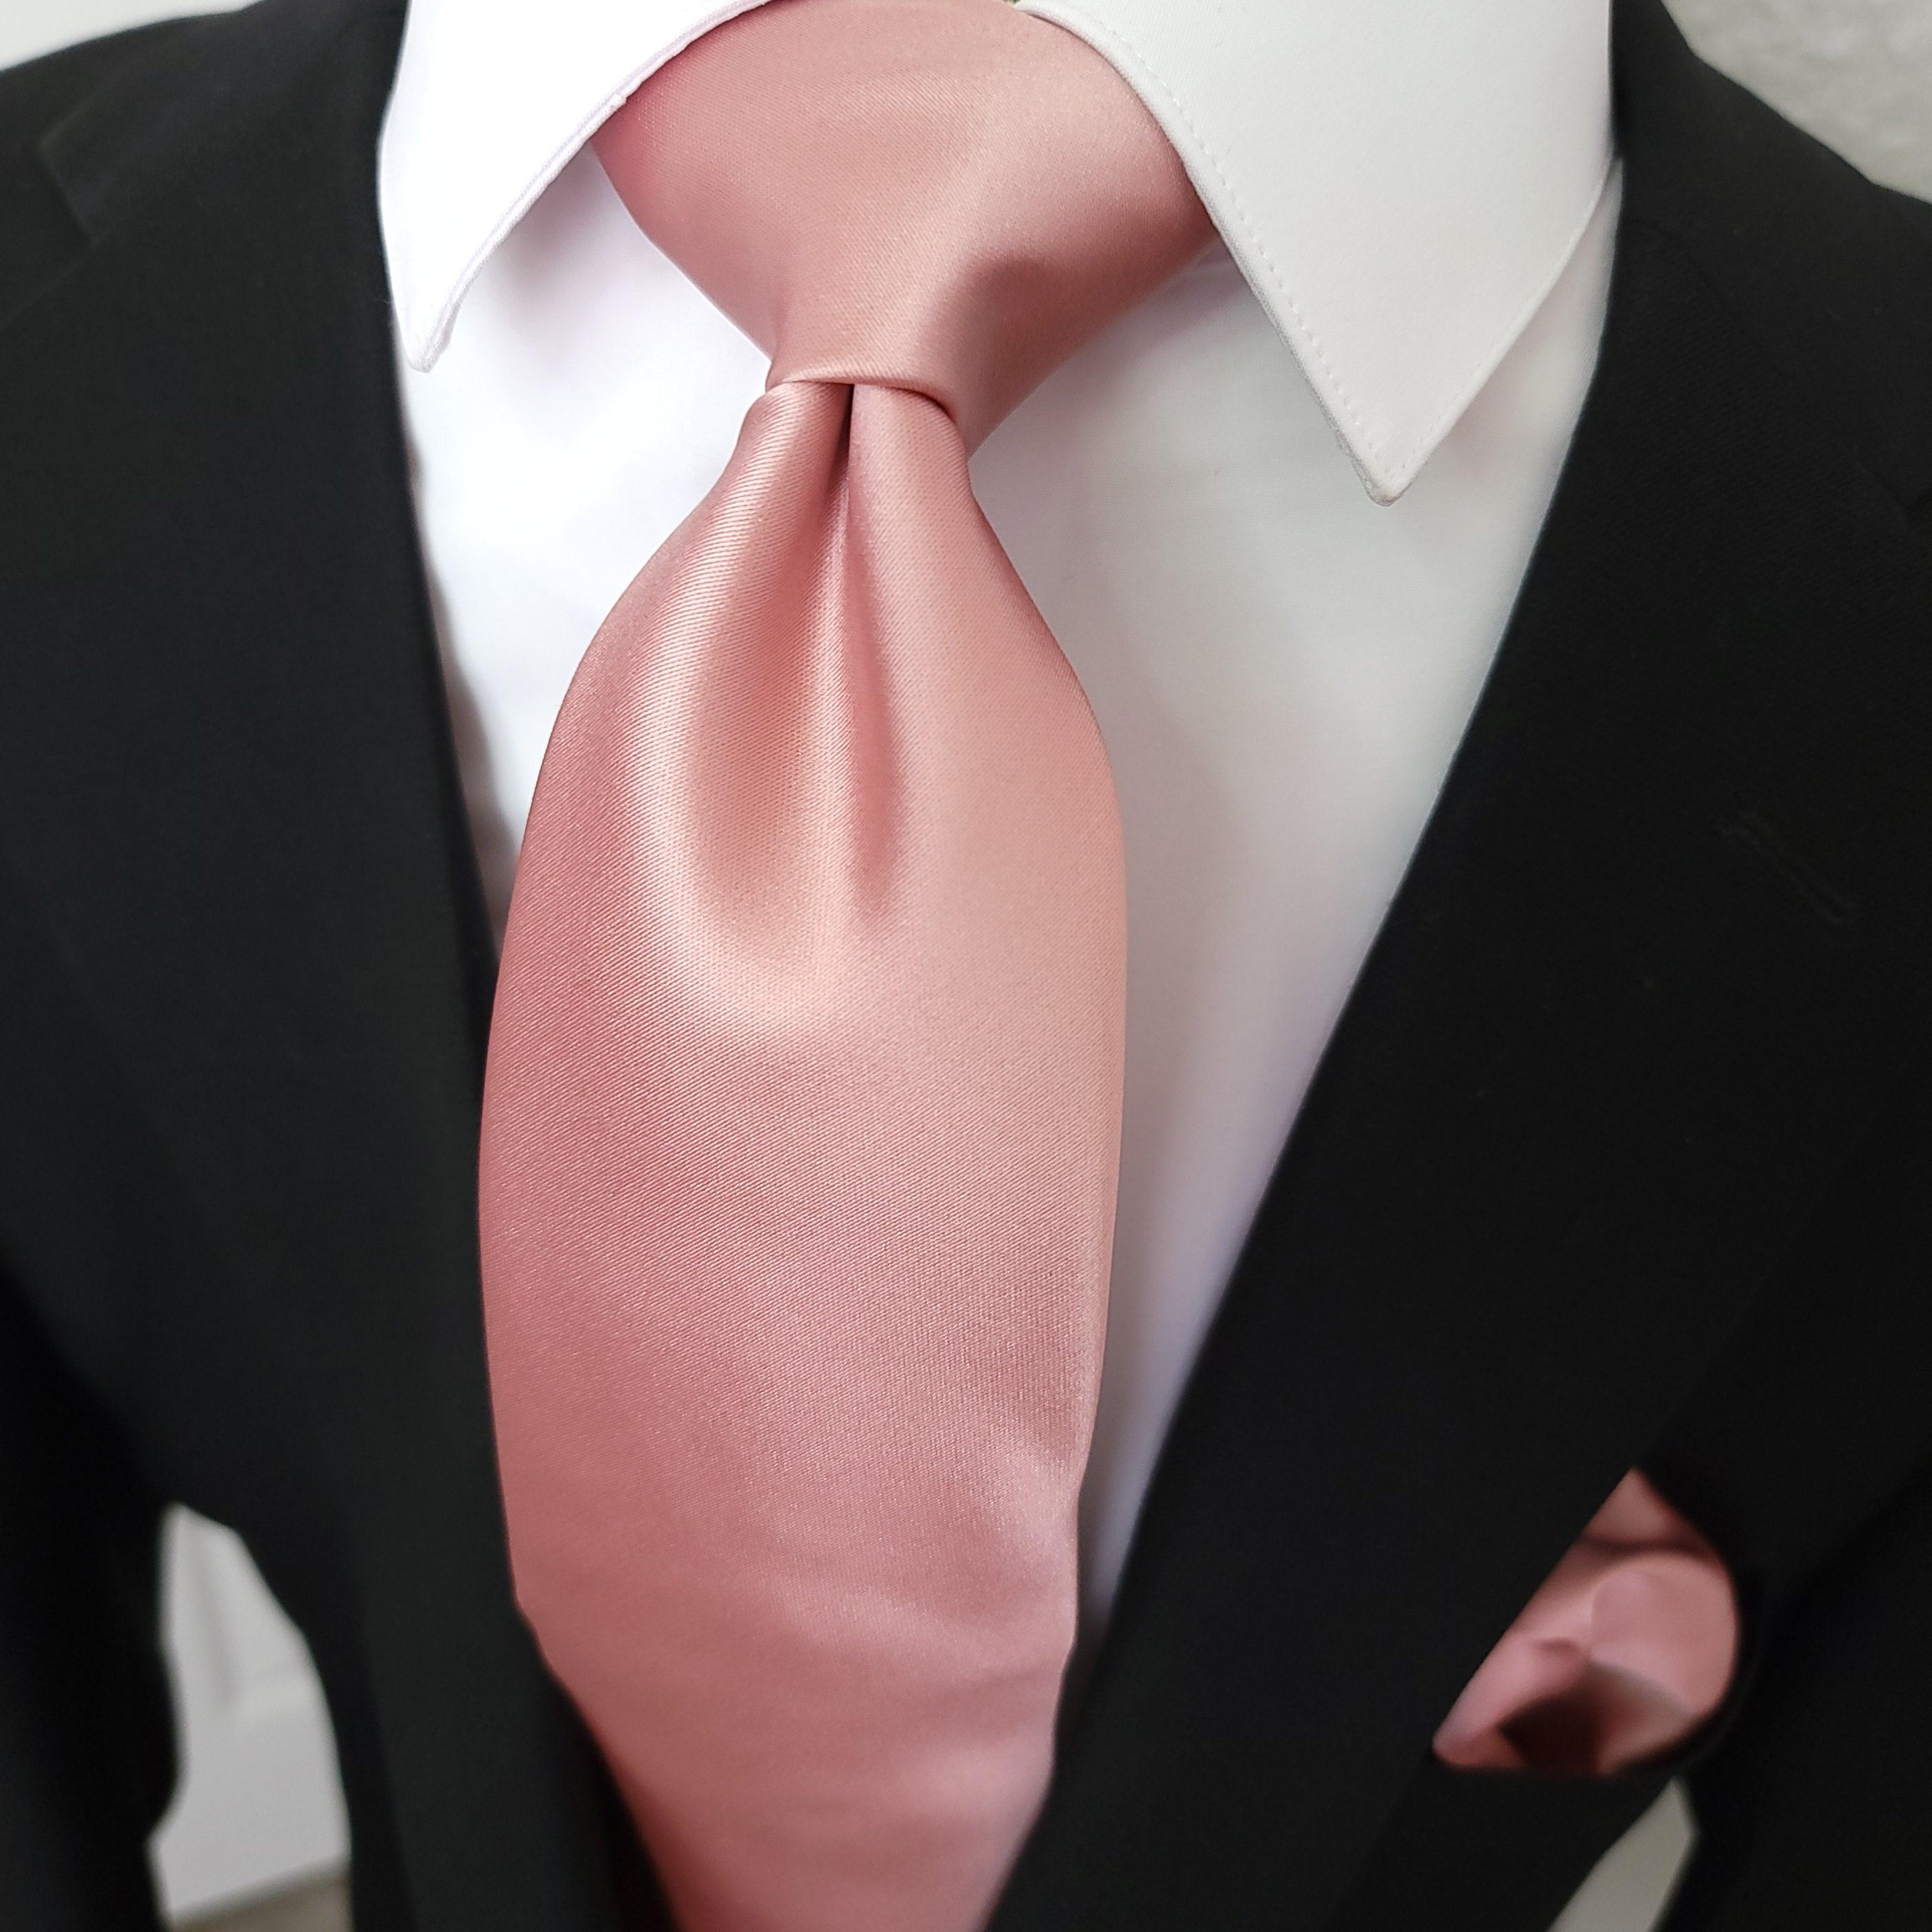 Coral Rose Gold Solid Silk Tie Pocket Square Cufflinks Set - STYLETIE